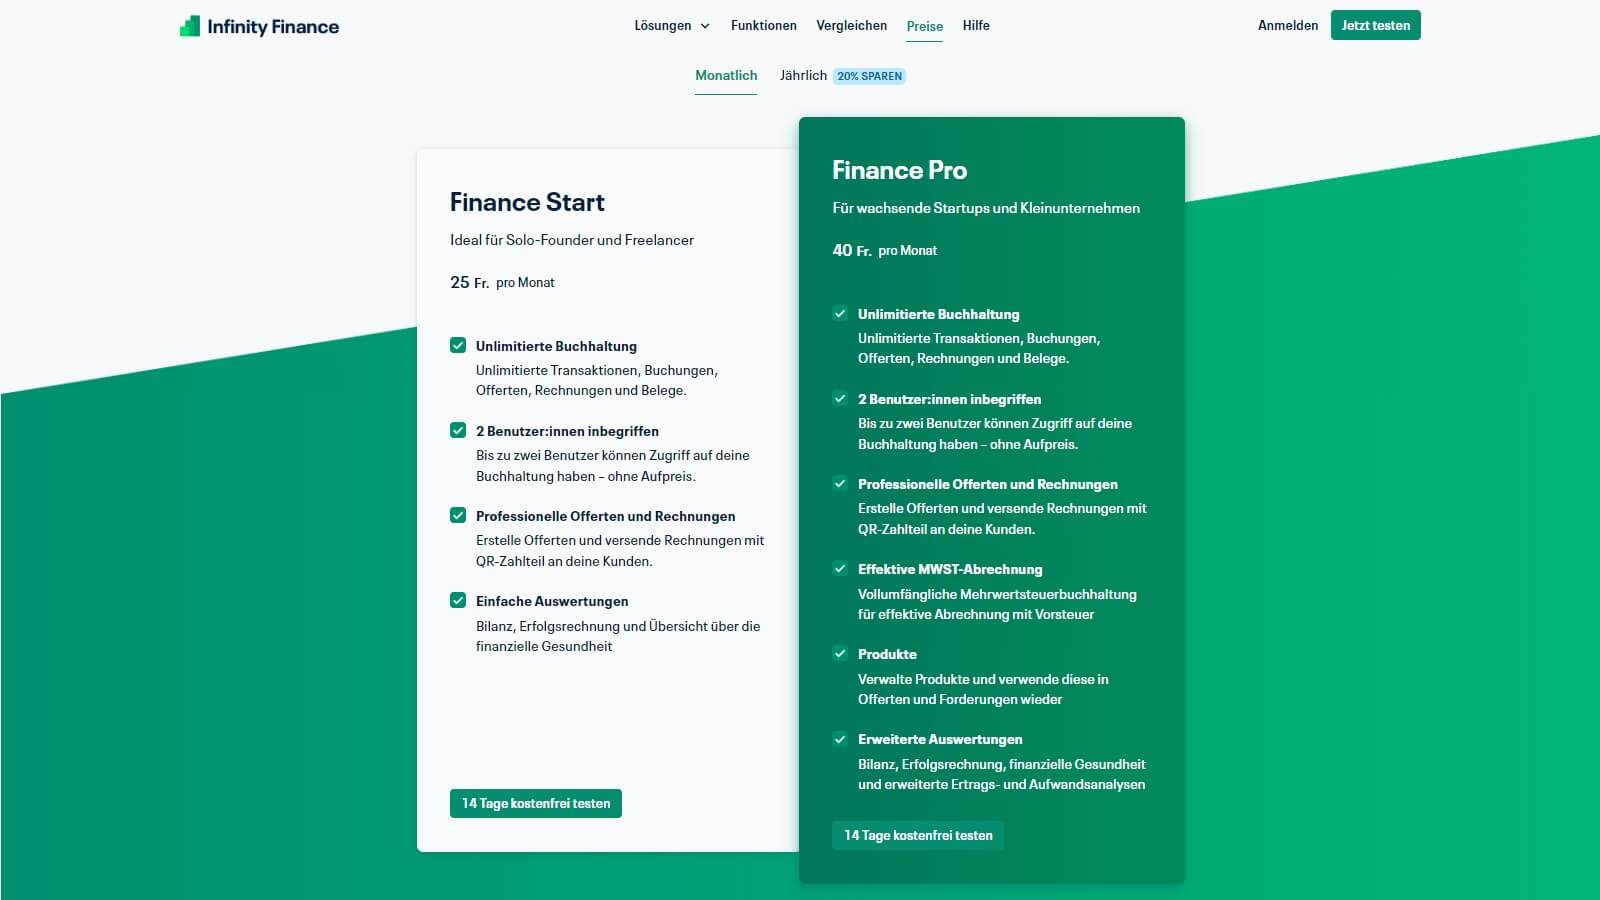 Infinity Finance - Preise - screenshot 1